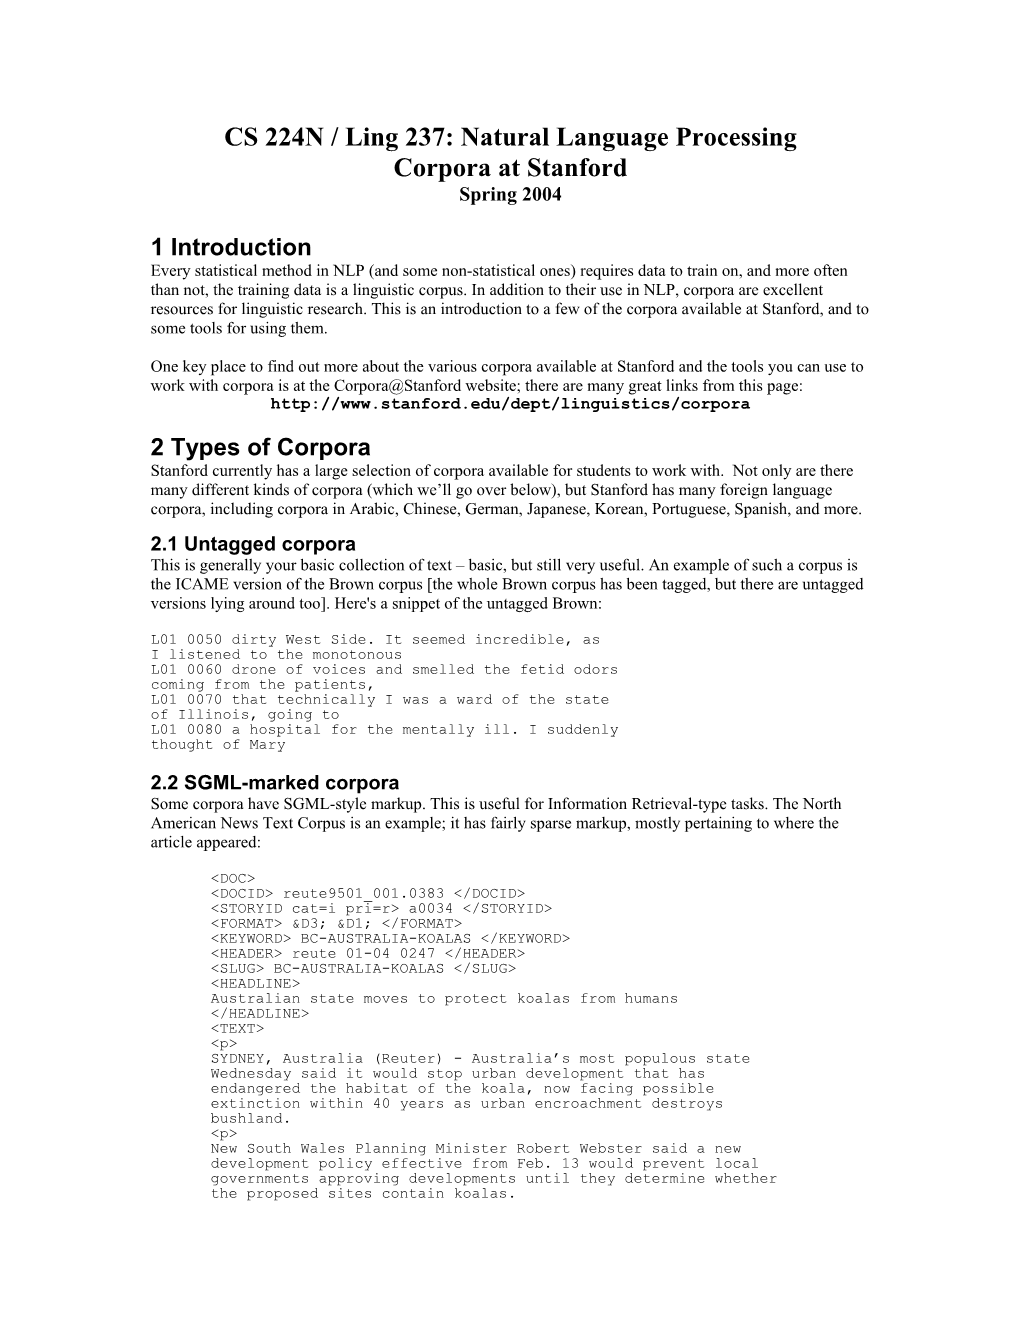 CS 224N / Ling 237: Natural Language Processing Corpora at Stanford Spring 2004